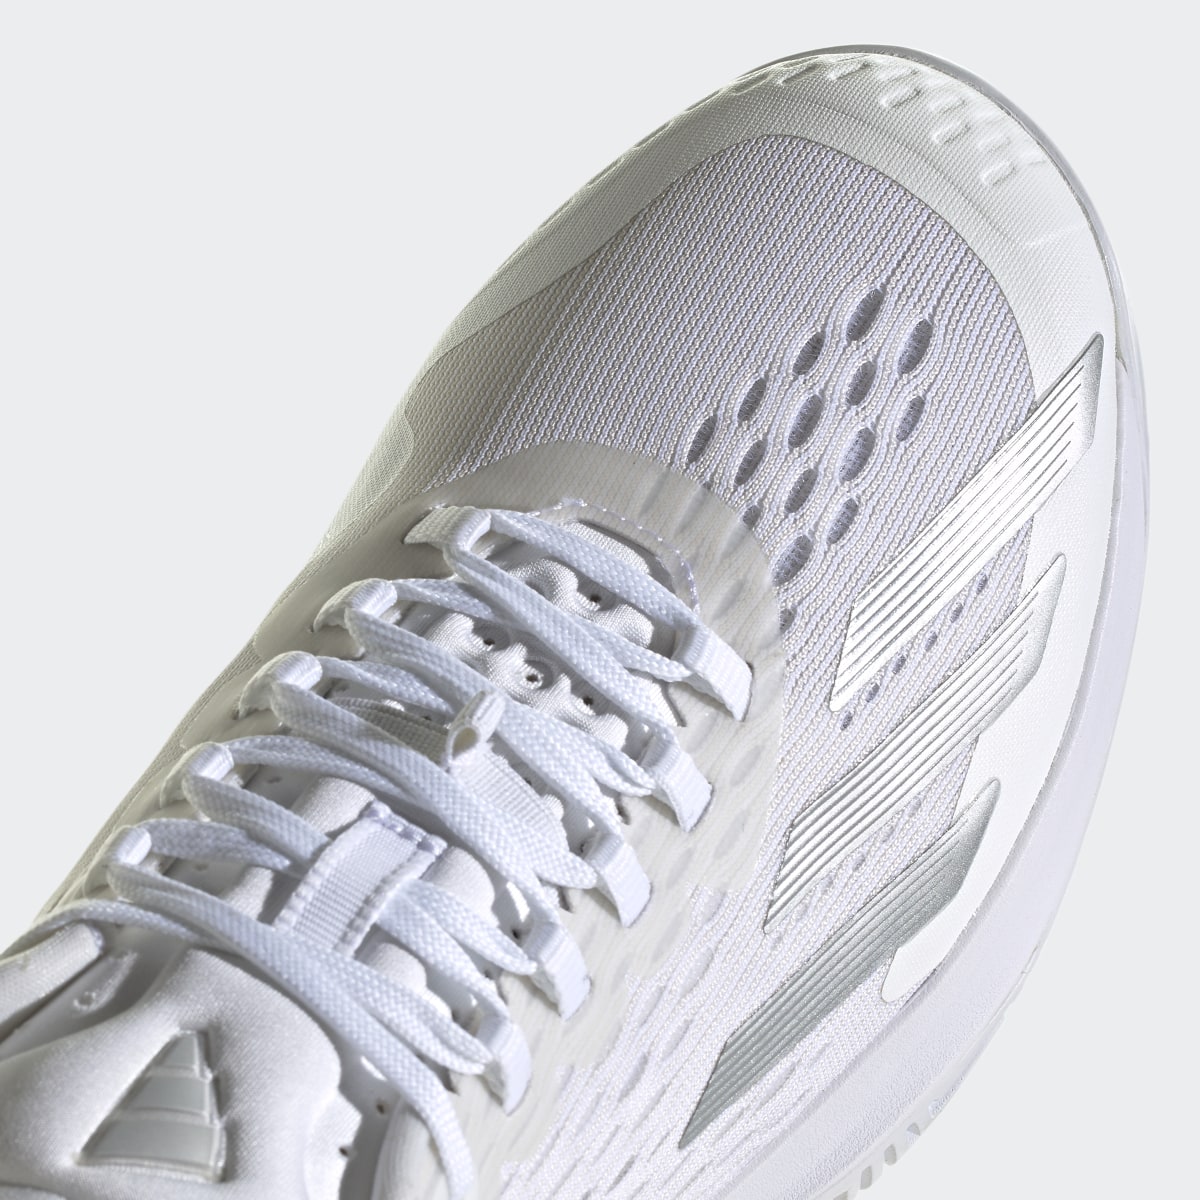 Adidas adizero Cybersonic Tenis Ayakkabısı. 12